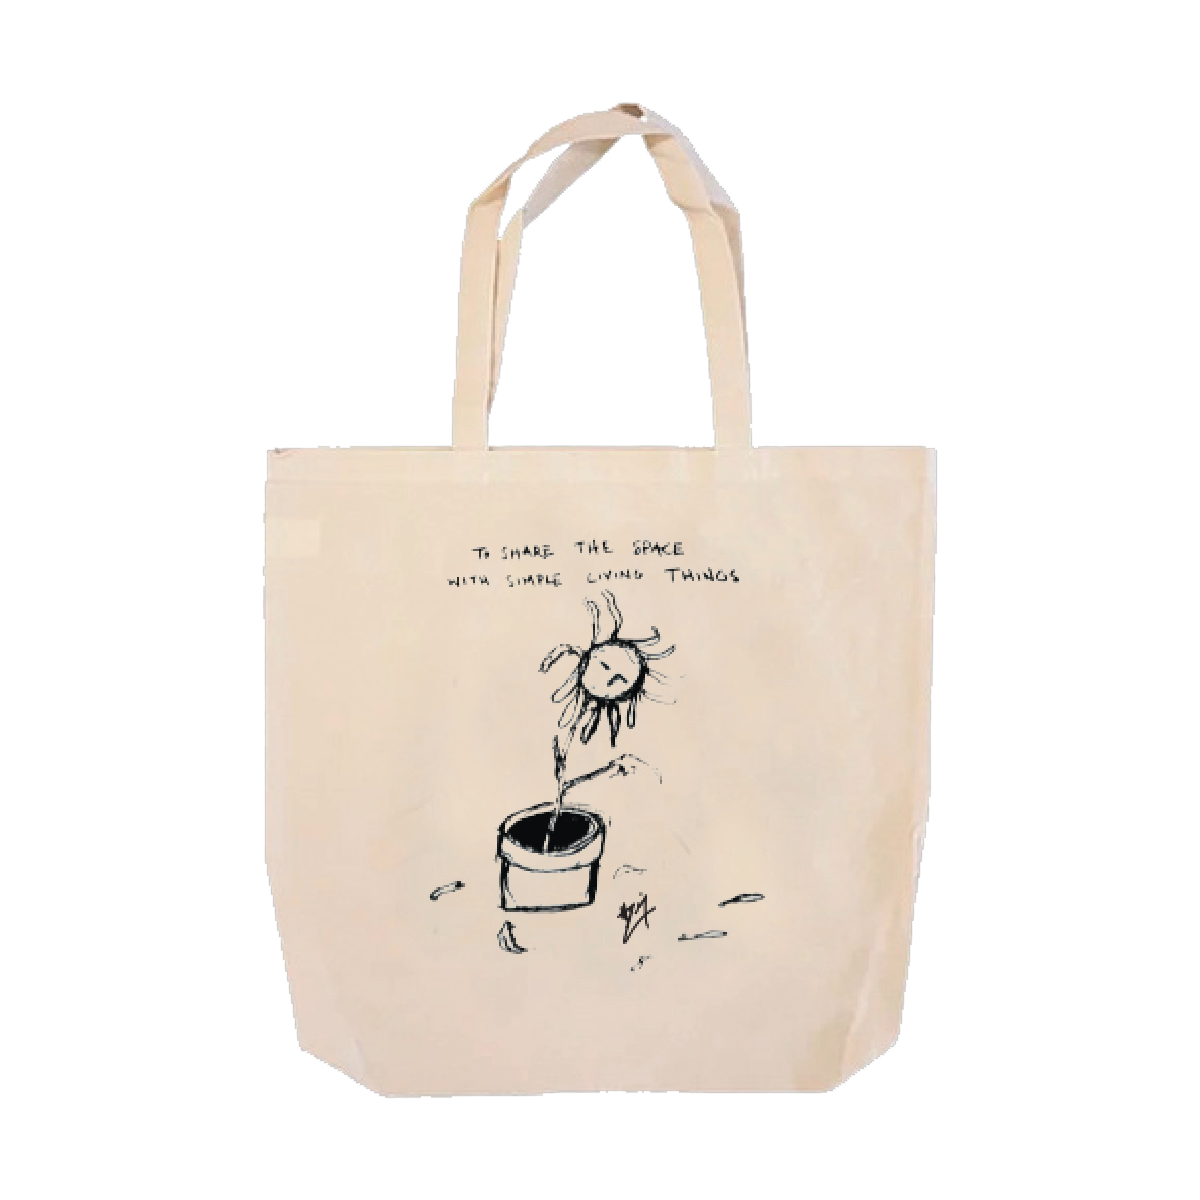 Hozier - Simple Living Things Tote Bag